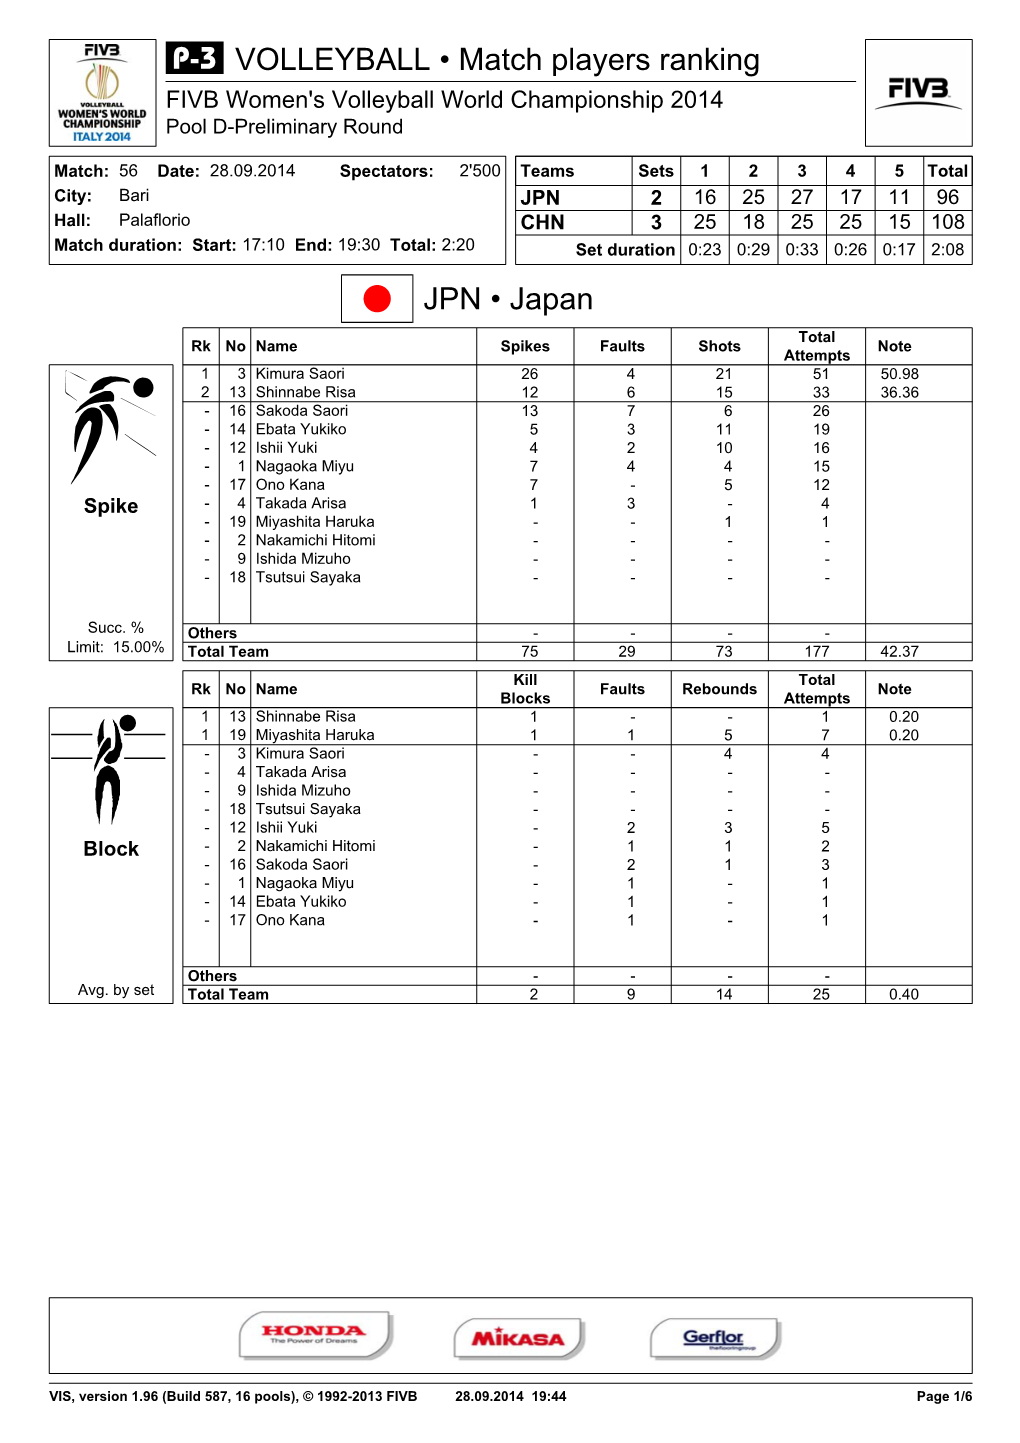 JPN • Japan VOLLEYBALL • Match Players Ranking